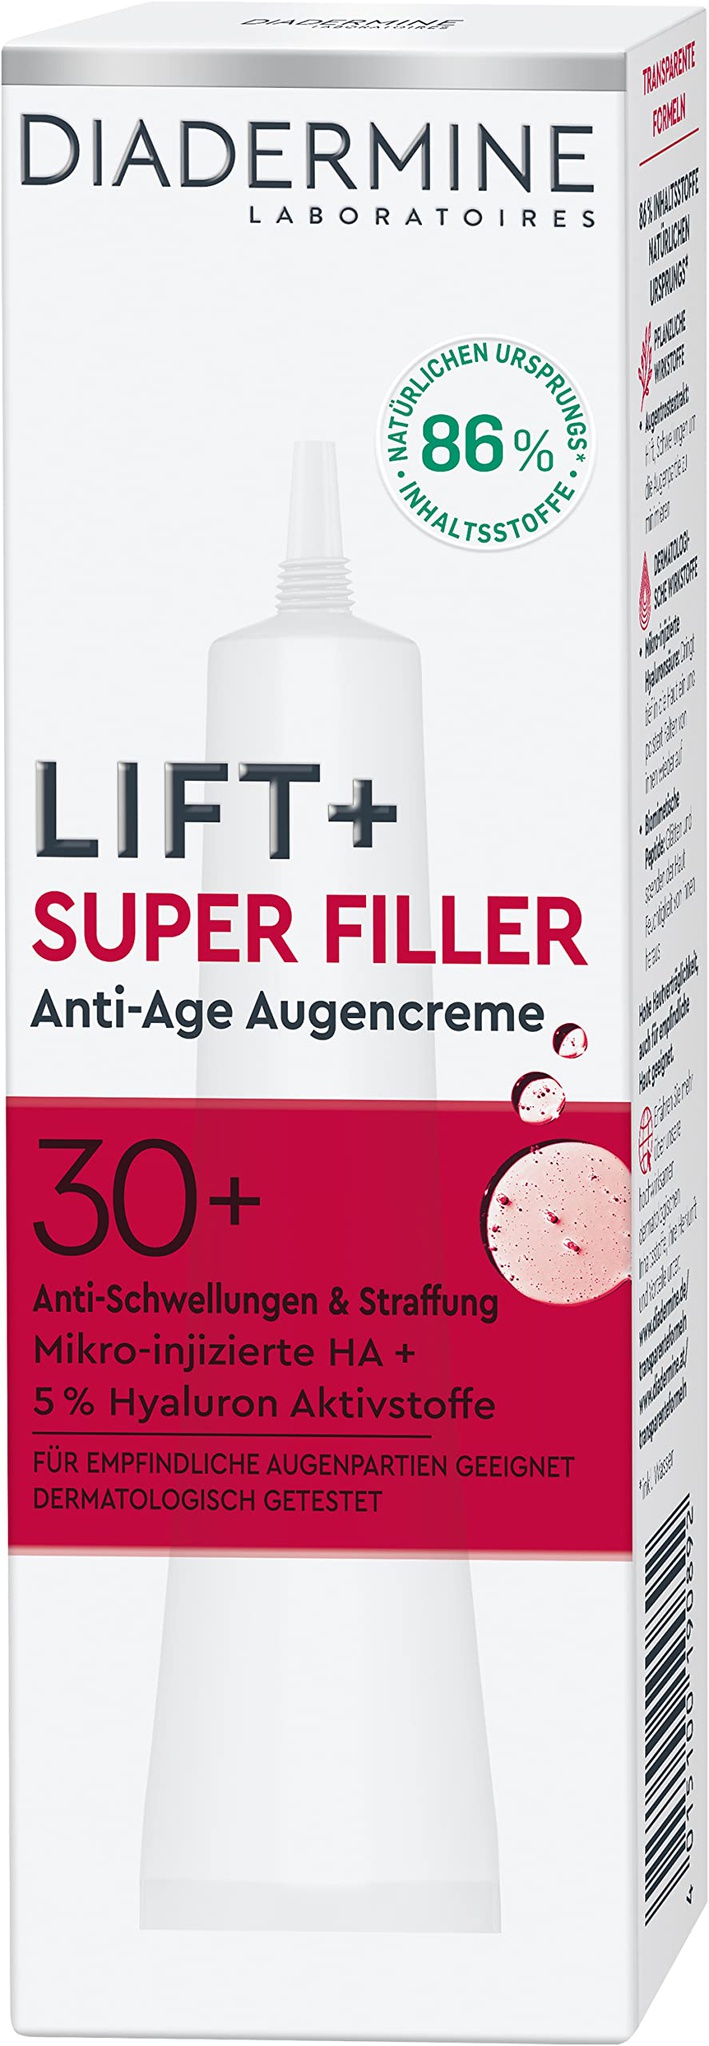 Diadermine Lift+ Super Filler Anti-age Augencreme